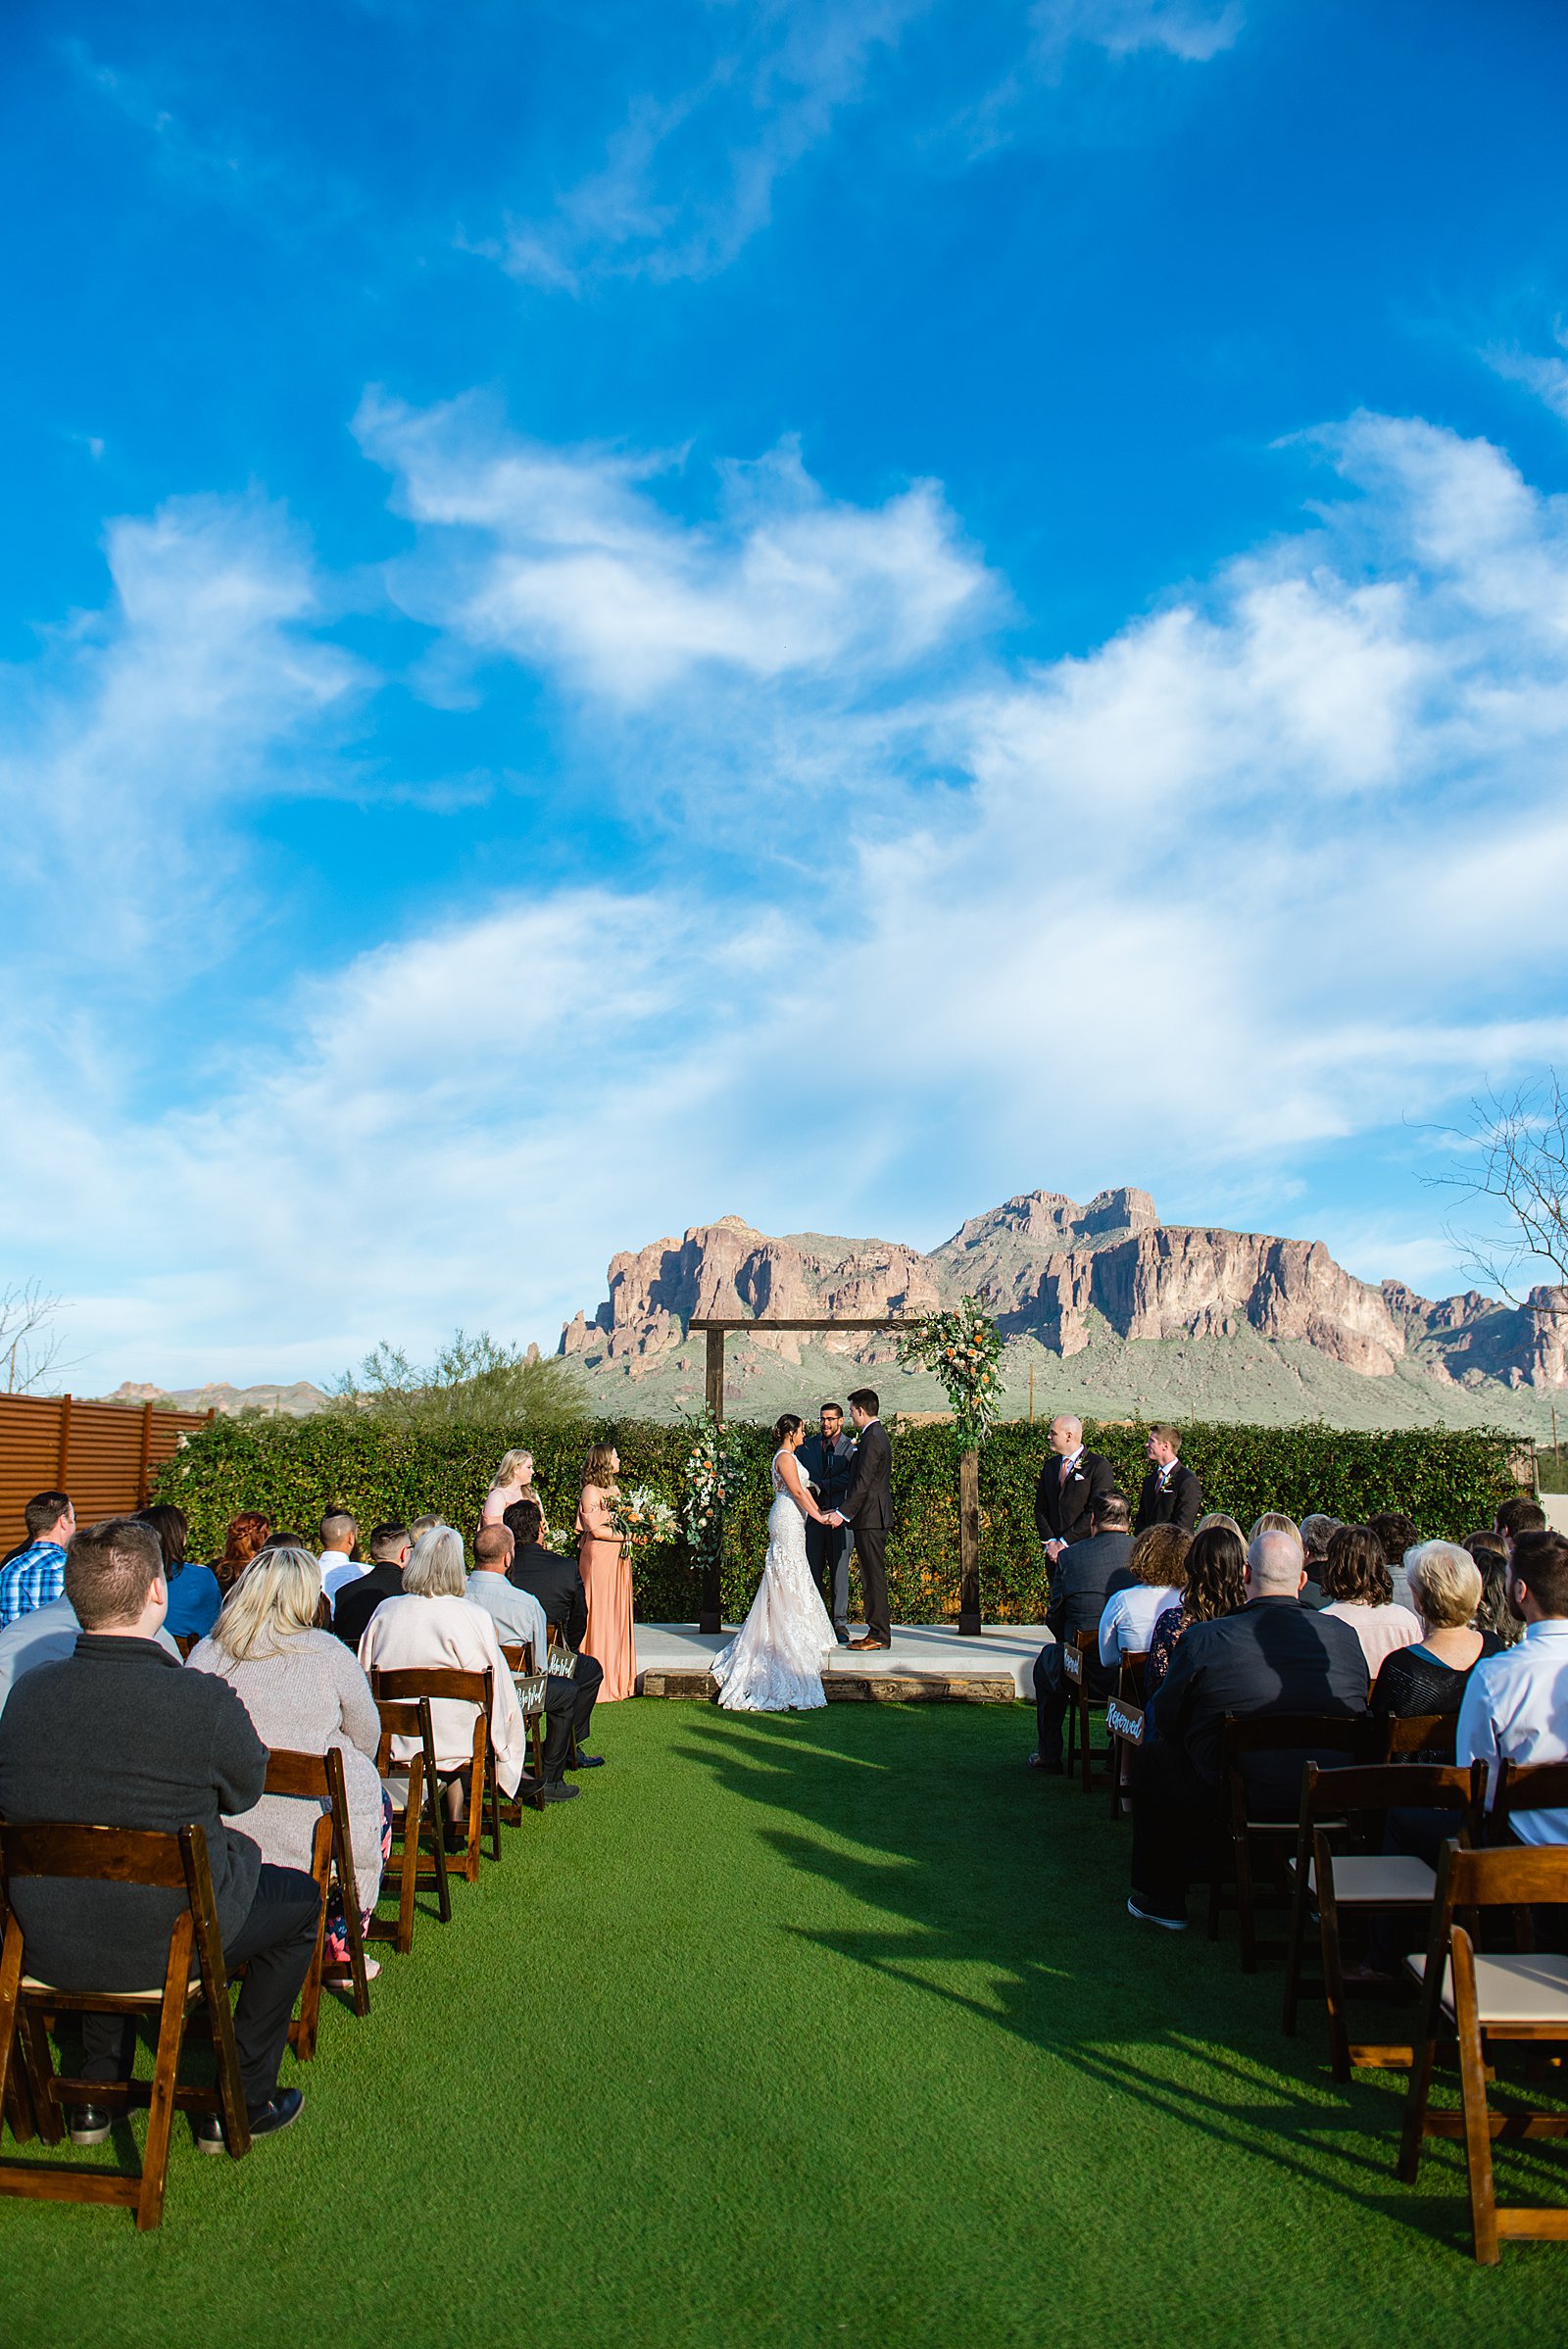 Wedding ceremony at The Paseo by Phoenix wedding photographer PMA Photography.